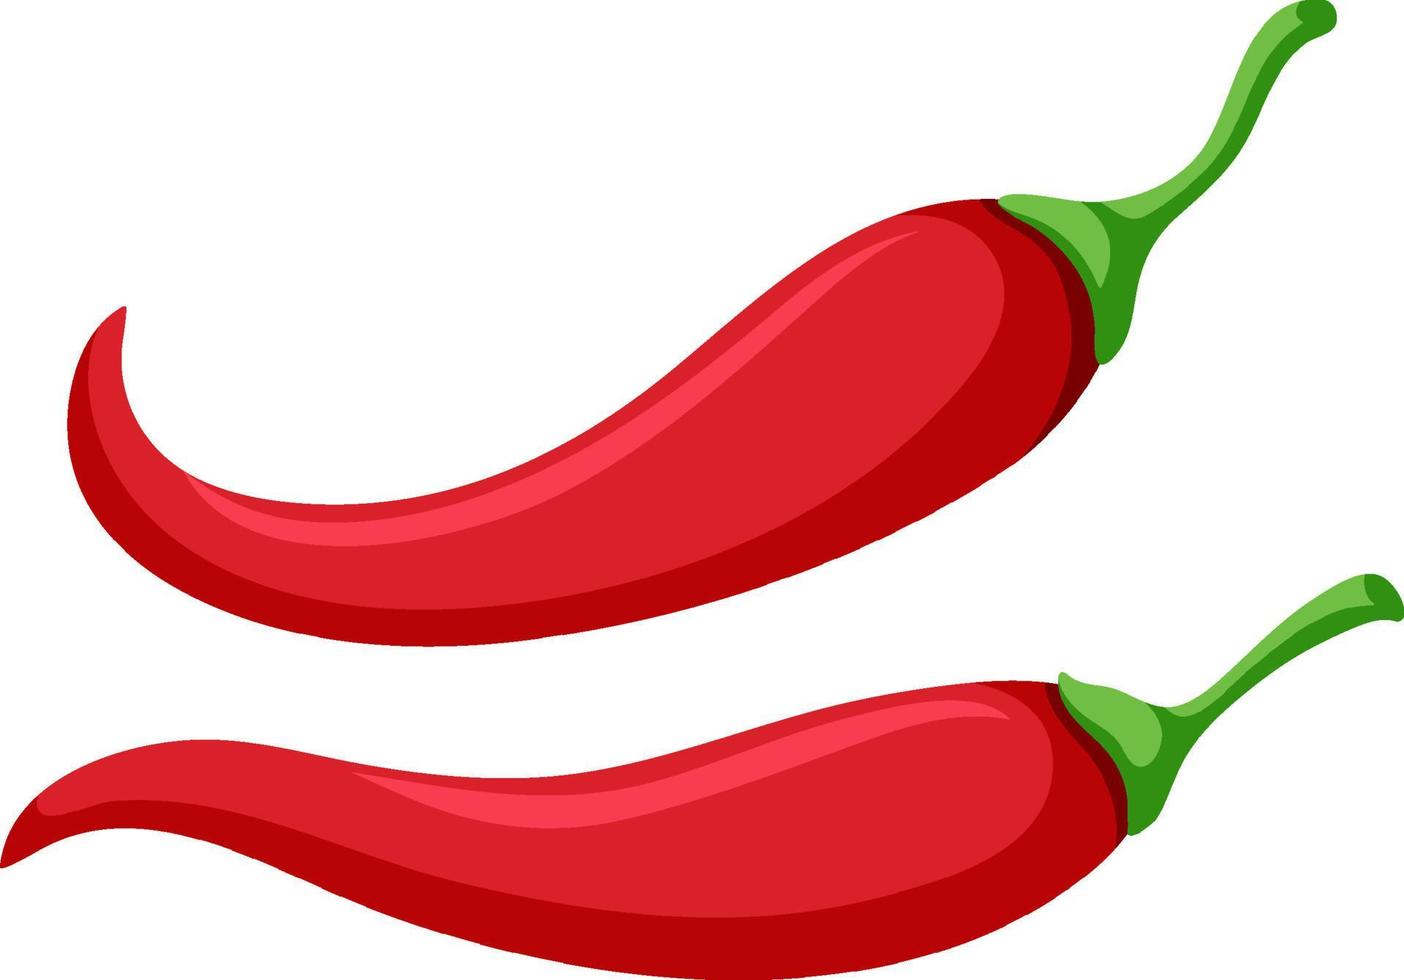 röd chili i tecknad stil vektor